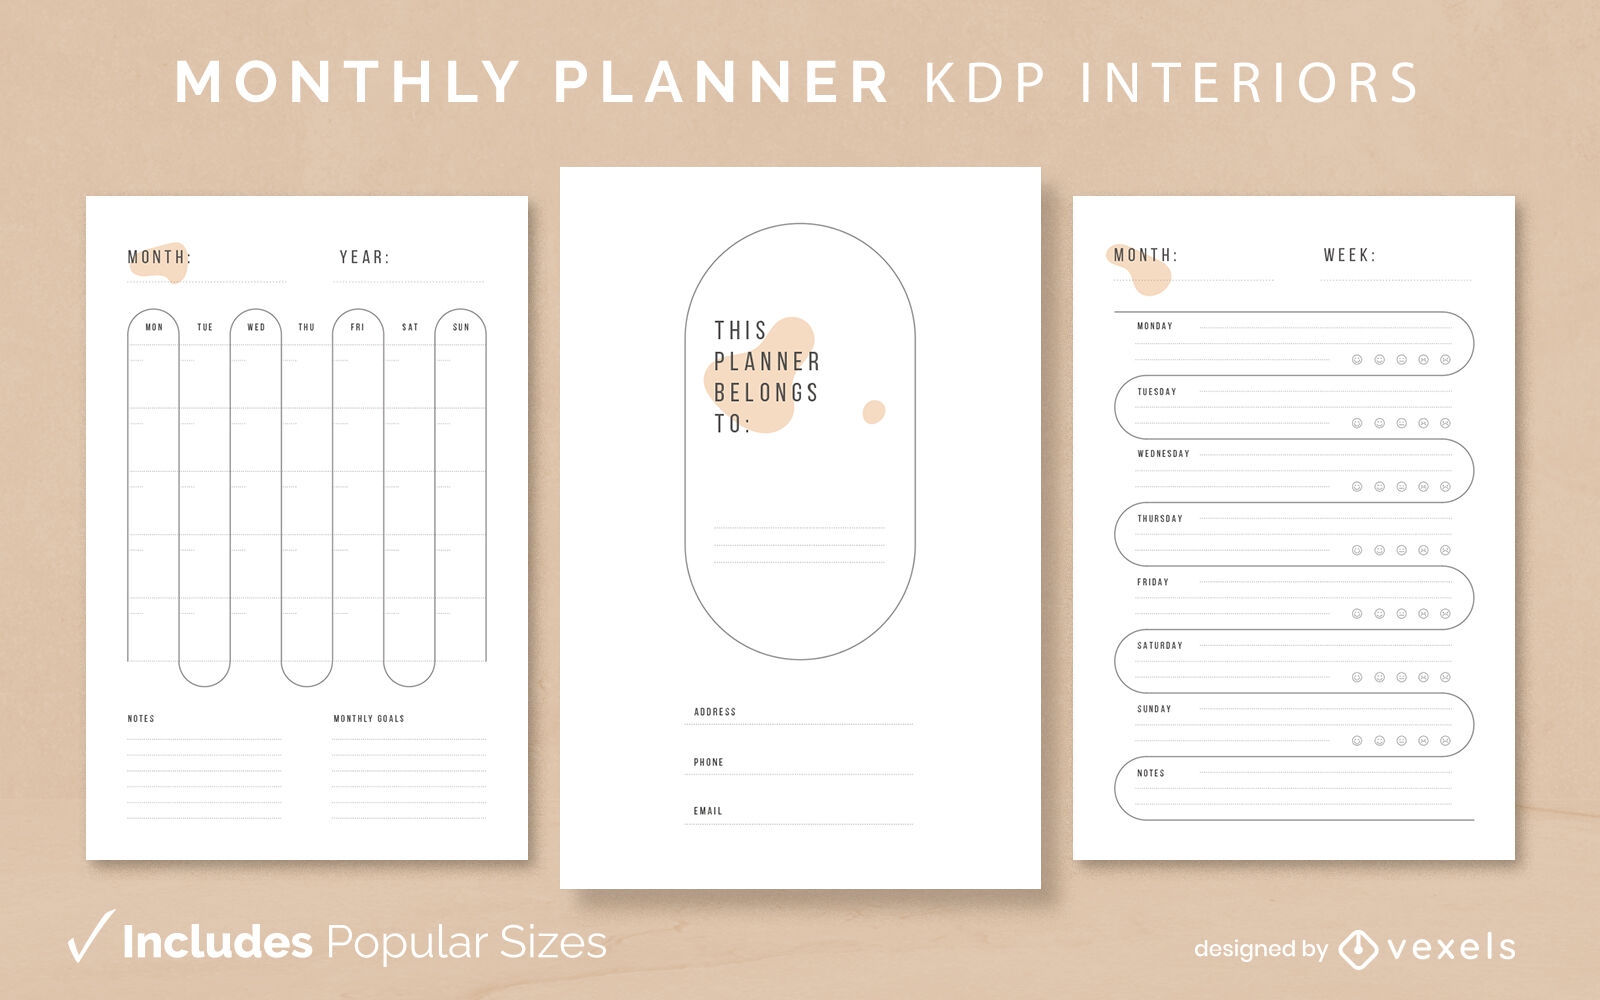 Modelo minimalista de planejador mensal KDP design de interiores